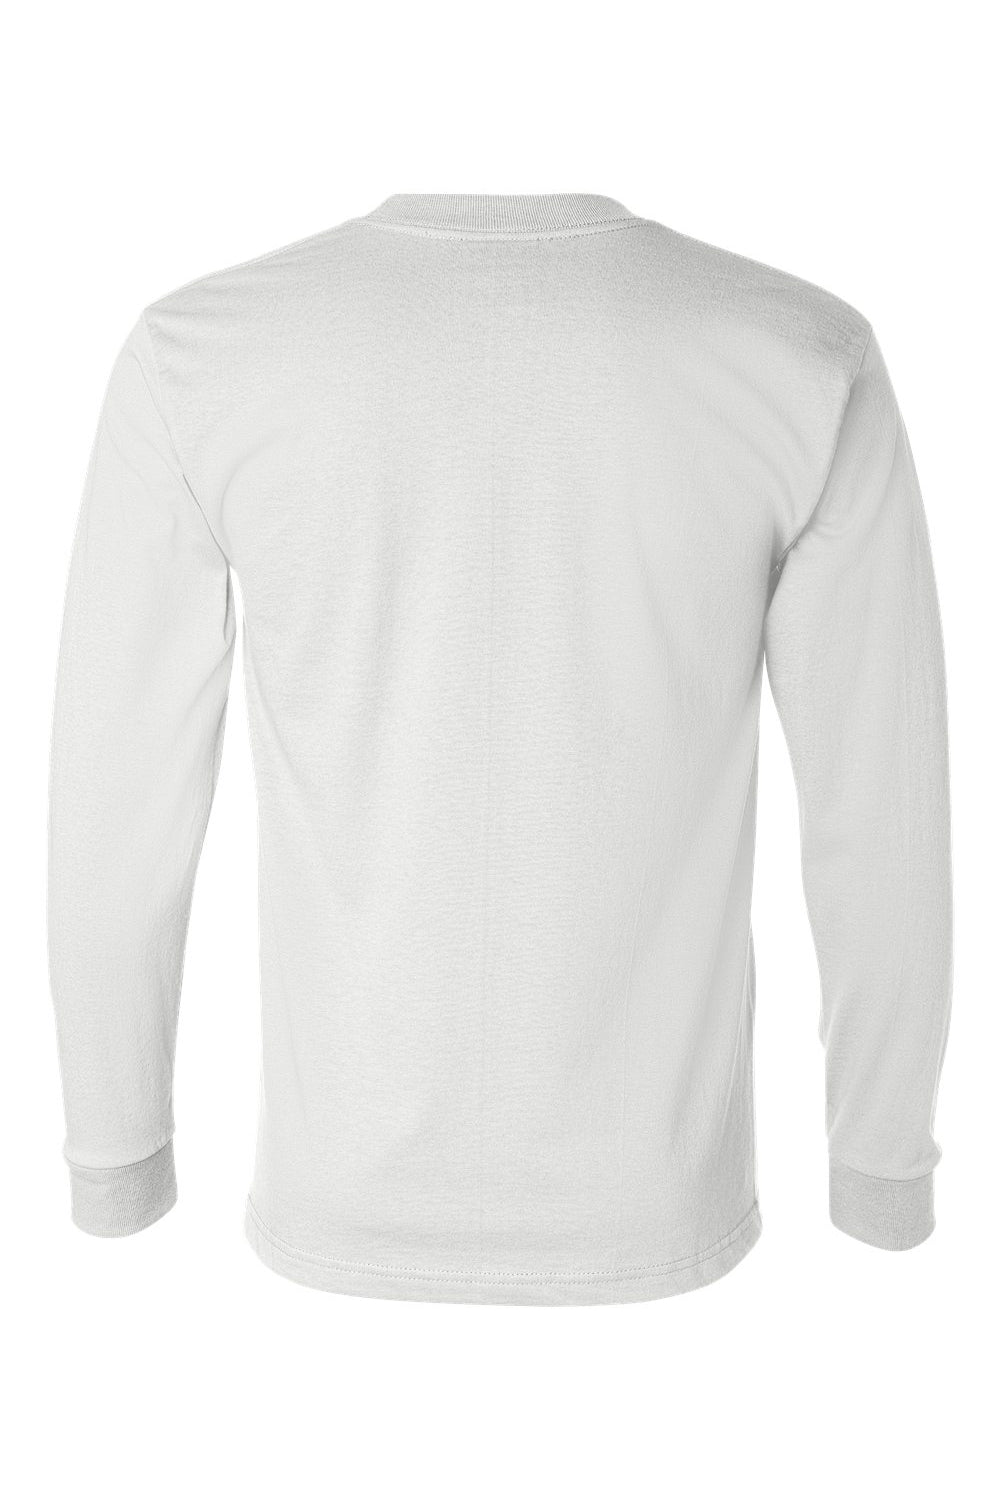 Bayside BA2955 Mens USA Made Long Sleeve Crewneck T-Shirt White Flat Back